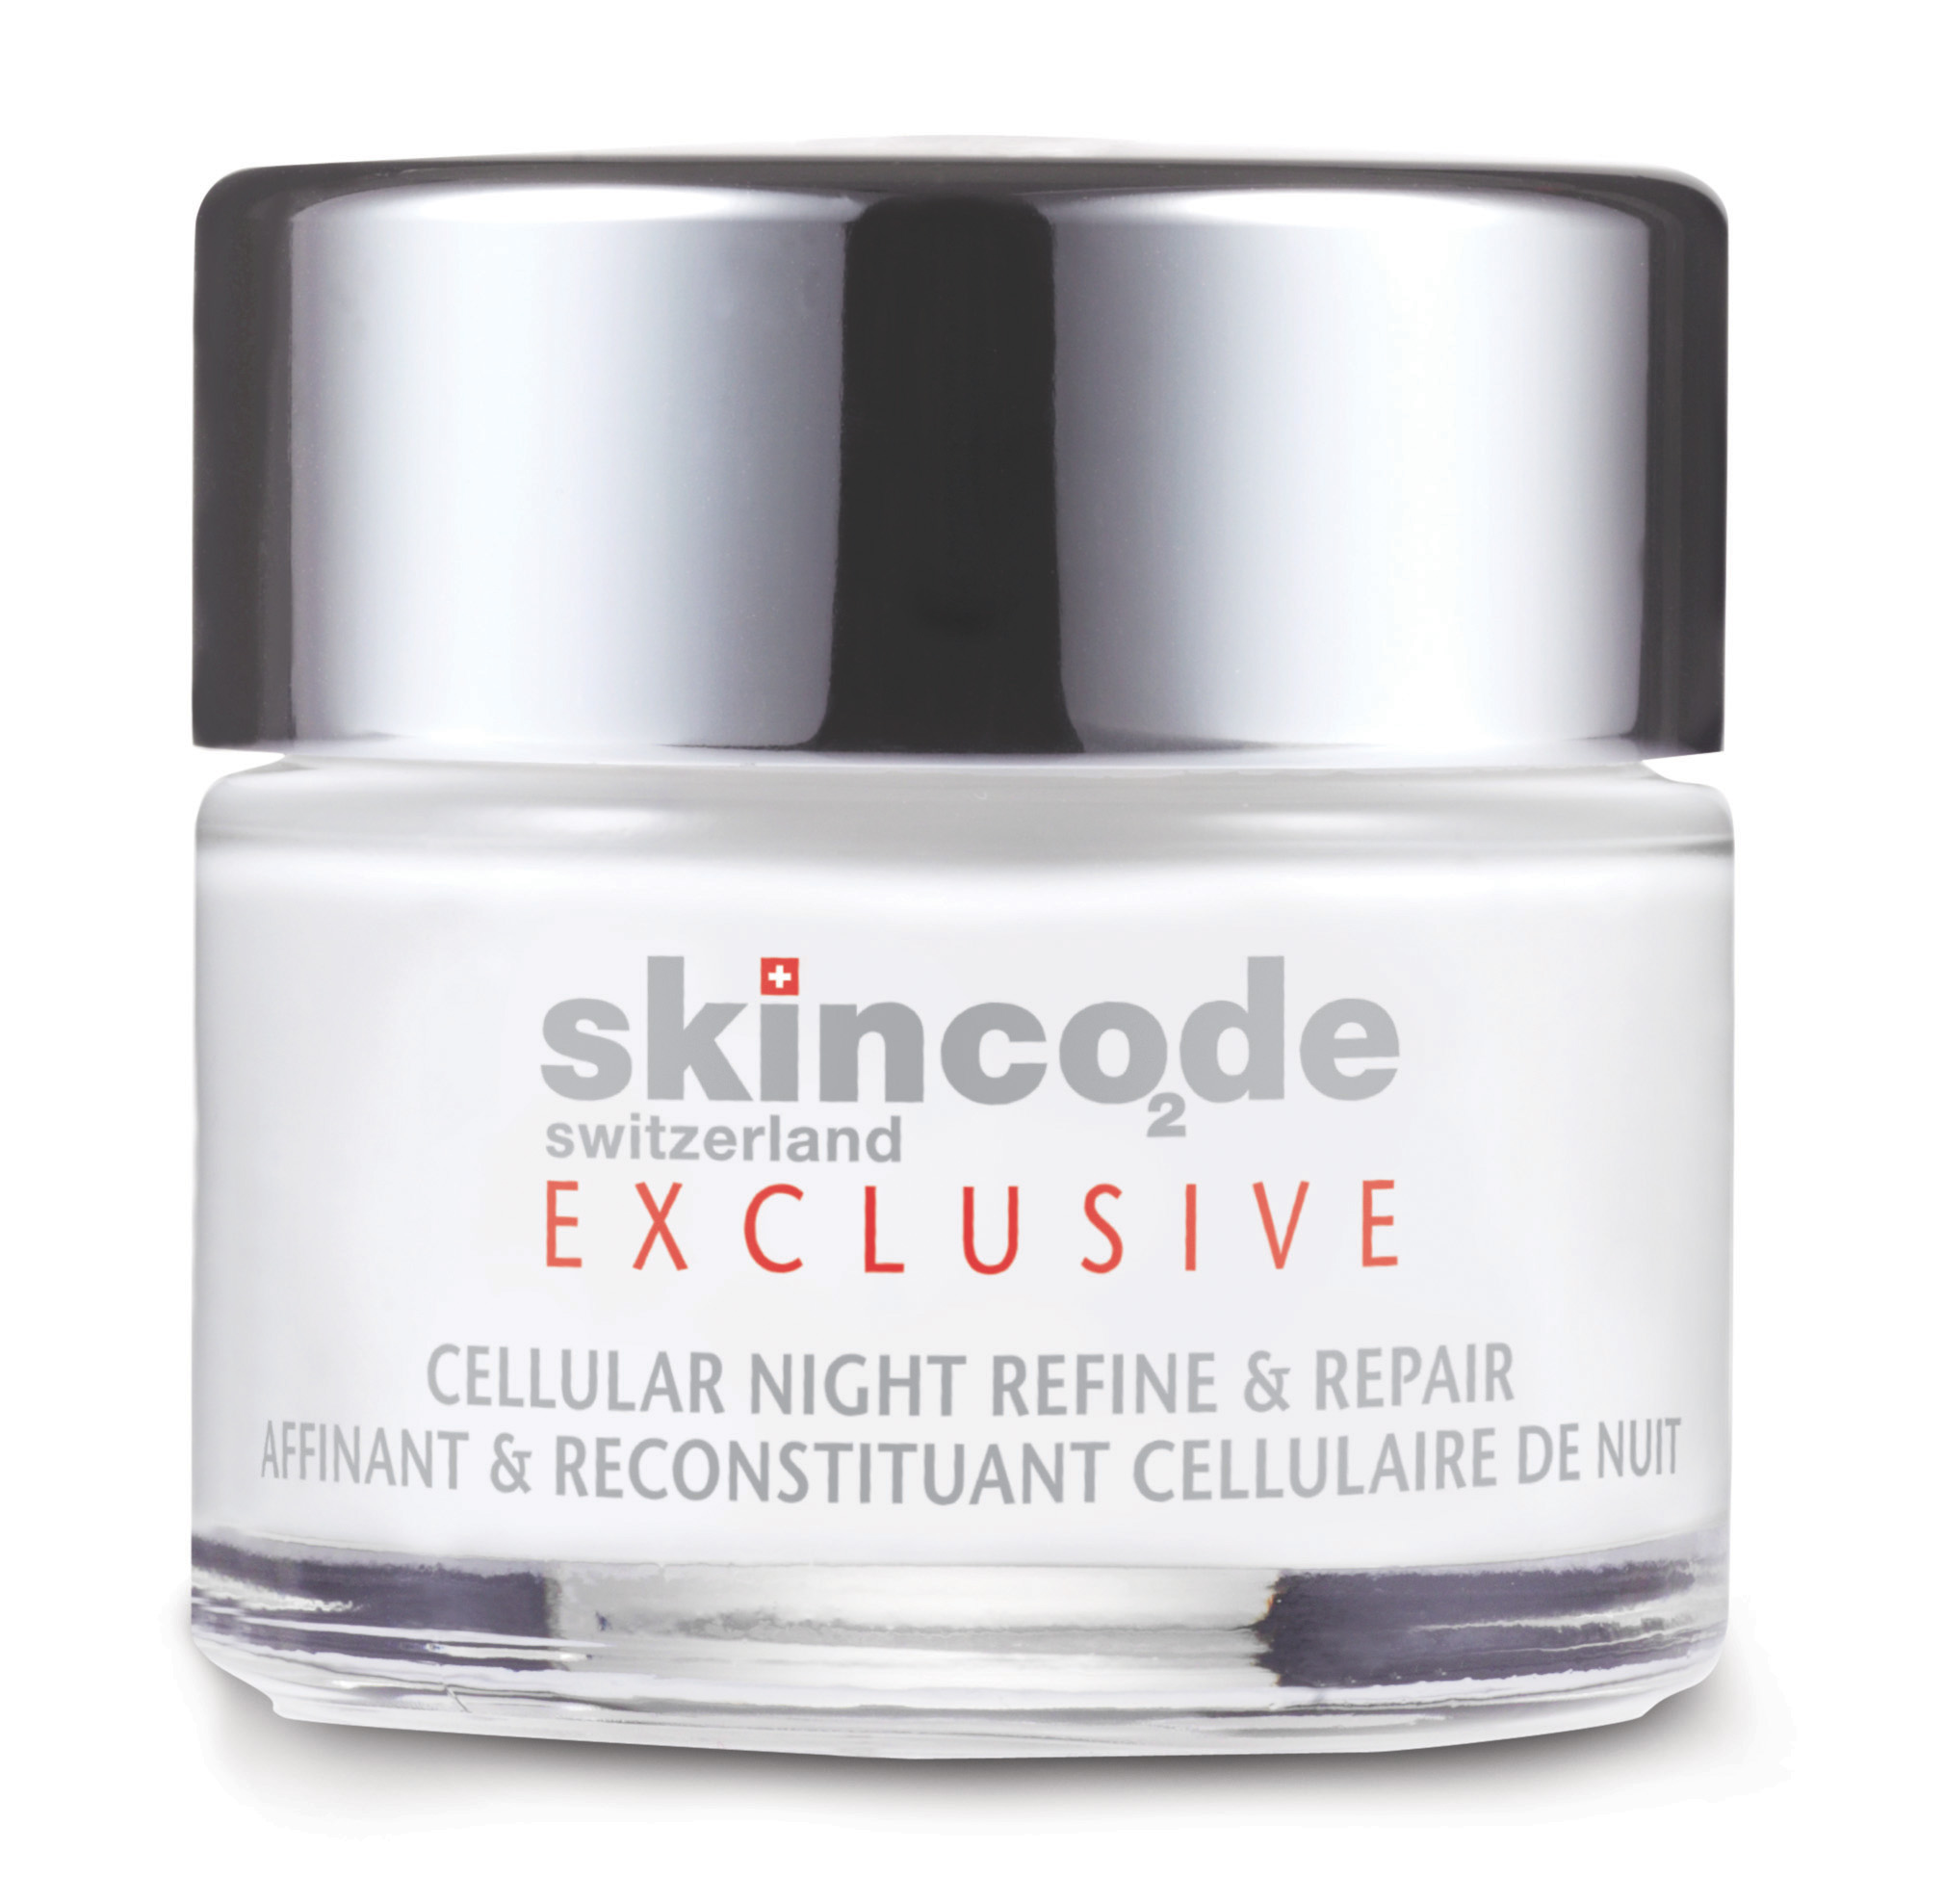 Skincode Cellular Night Refine & Repair 50ml